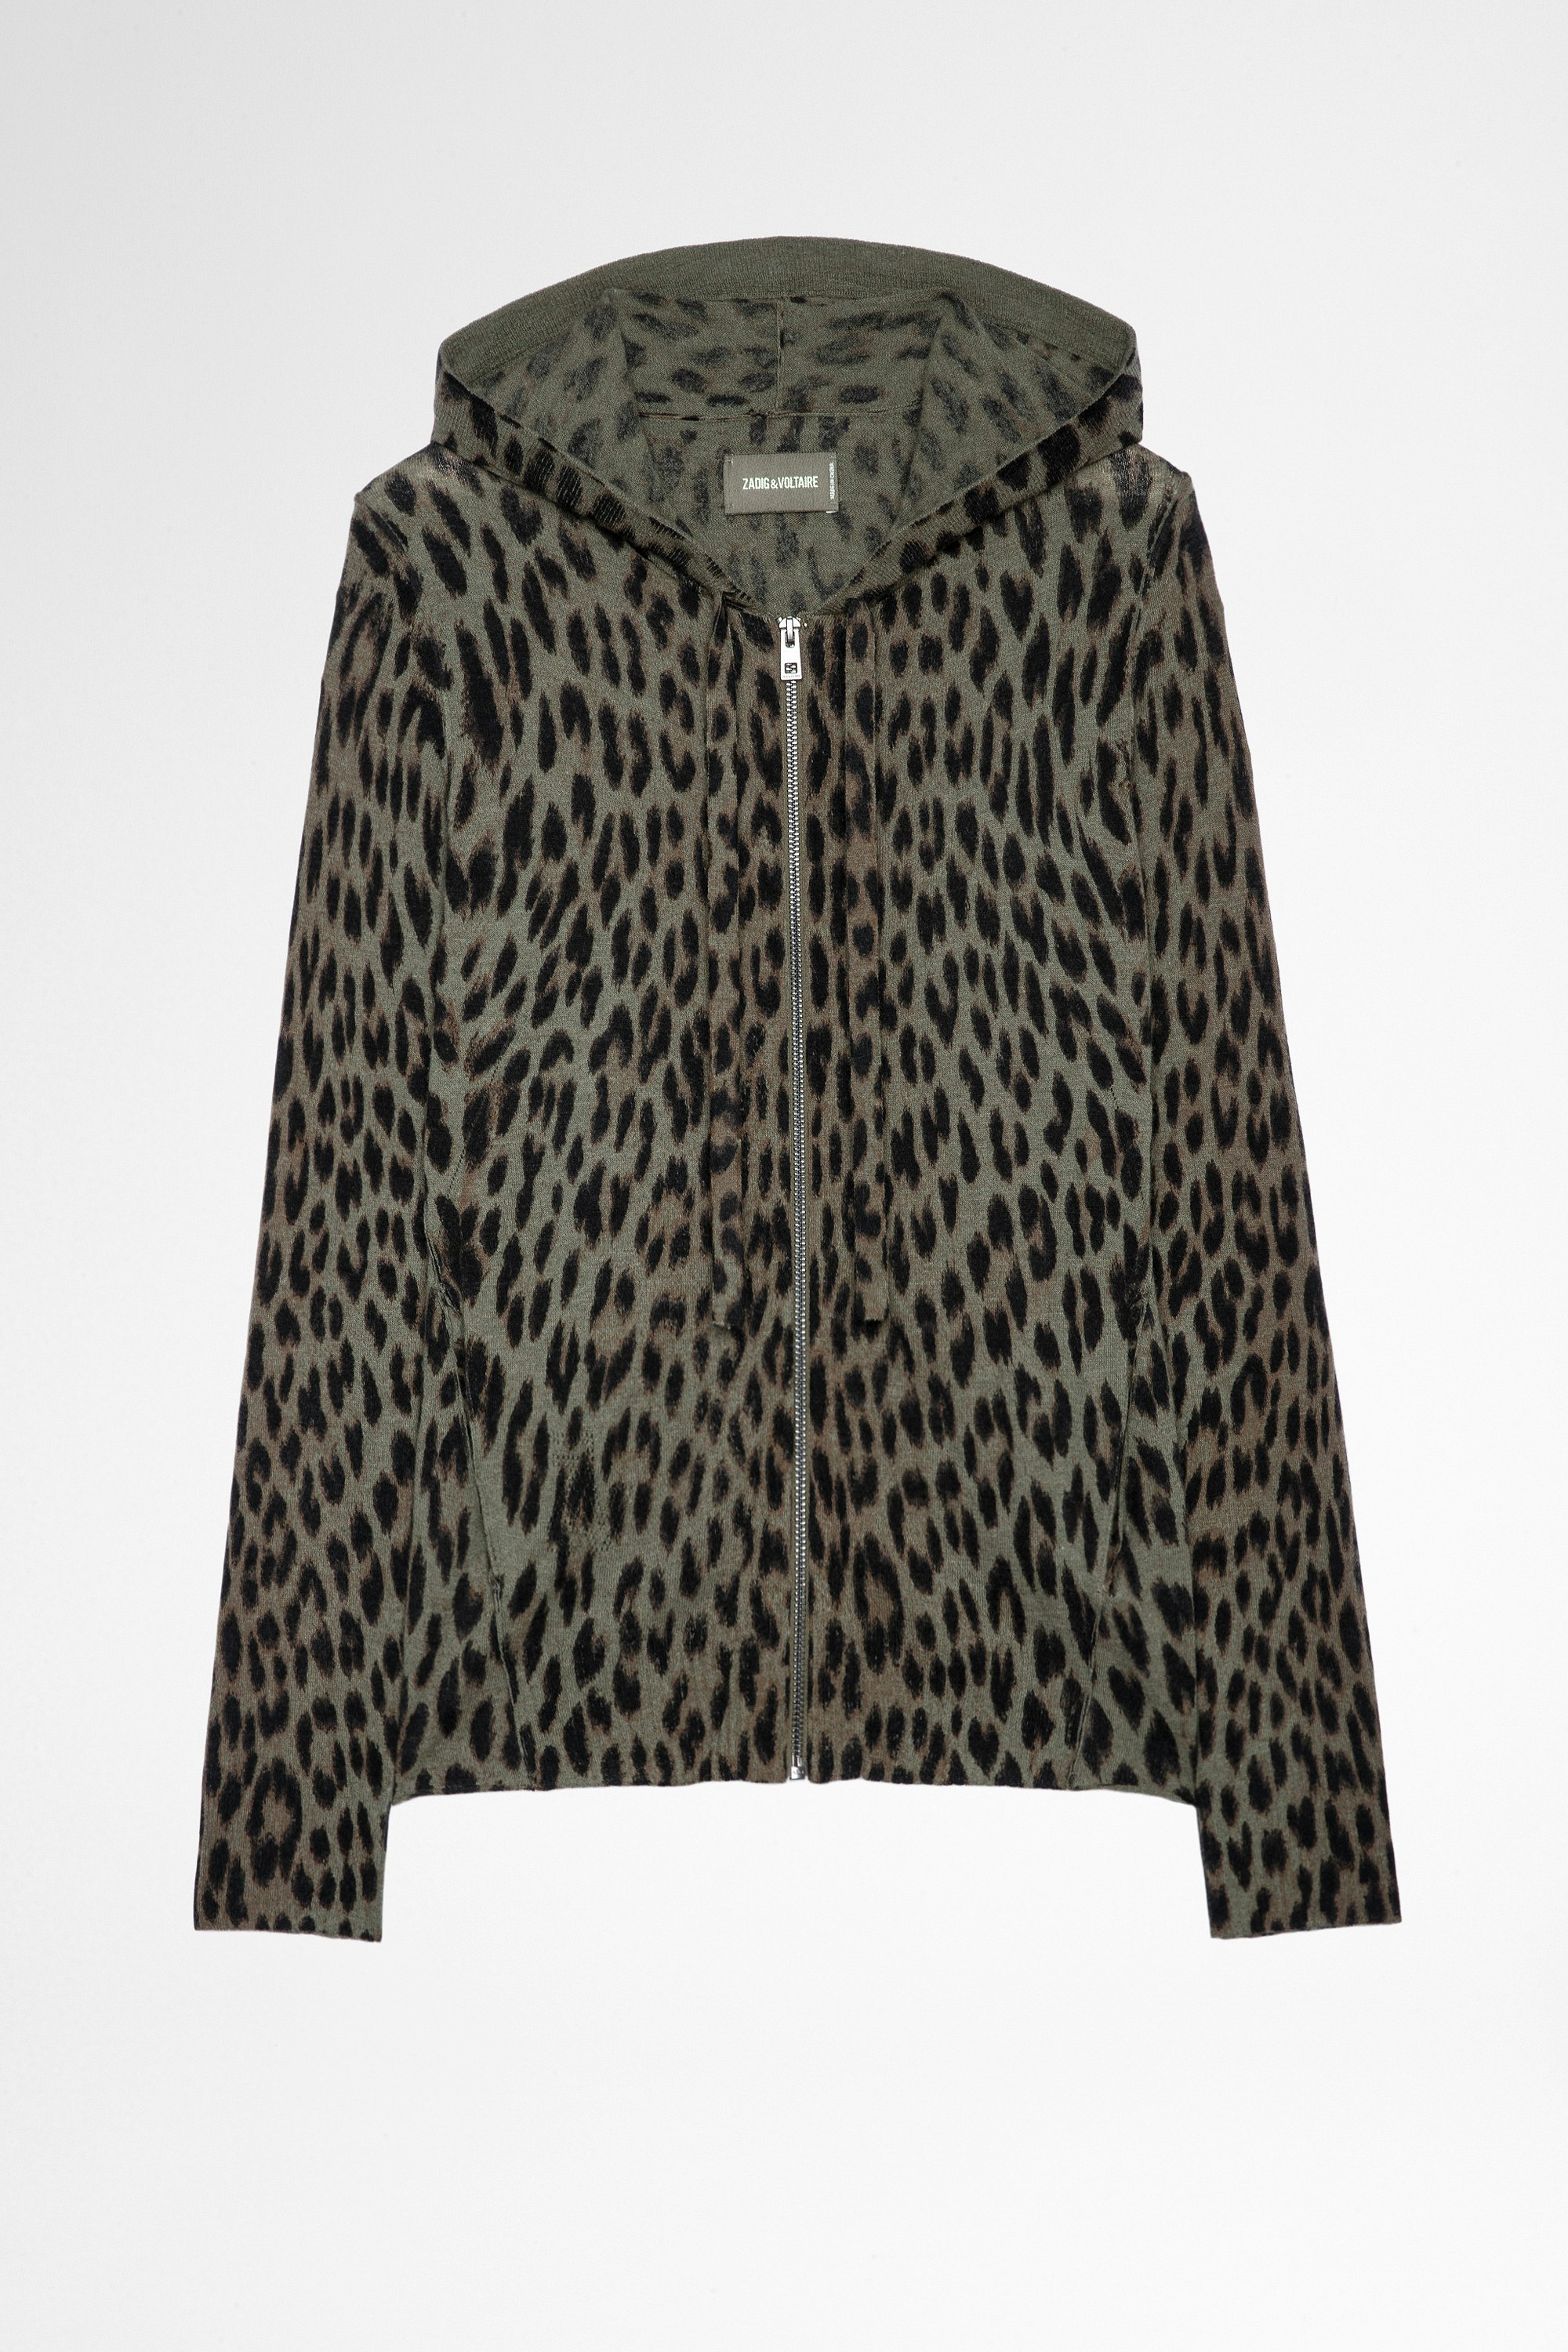 Cassy Leo Cashmere Cardigan Women's zip-up cardigan in khaki cashmere with leopard print